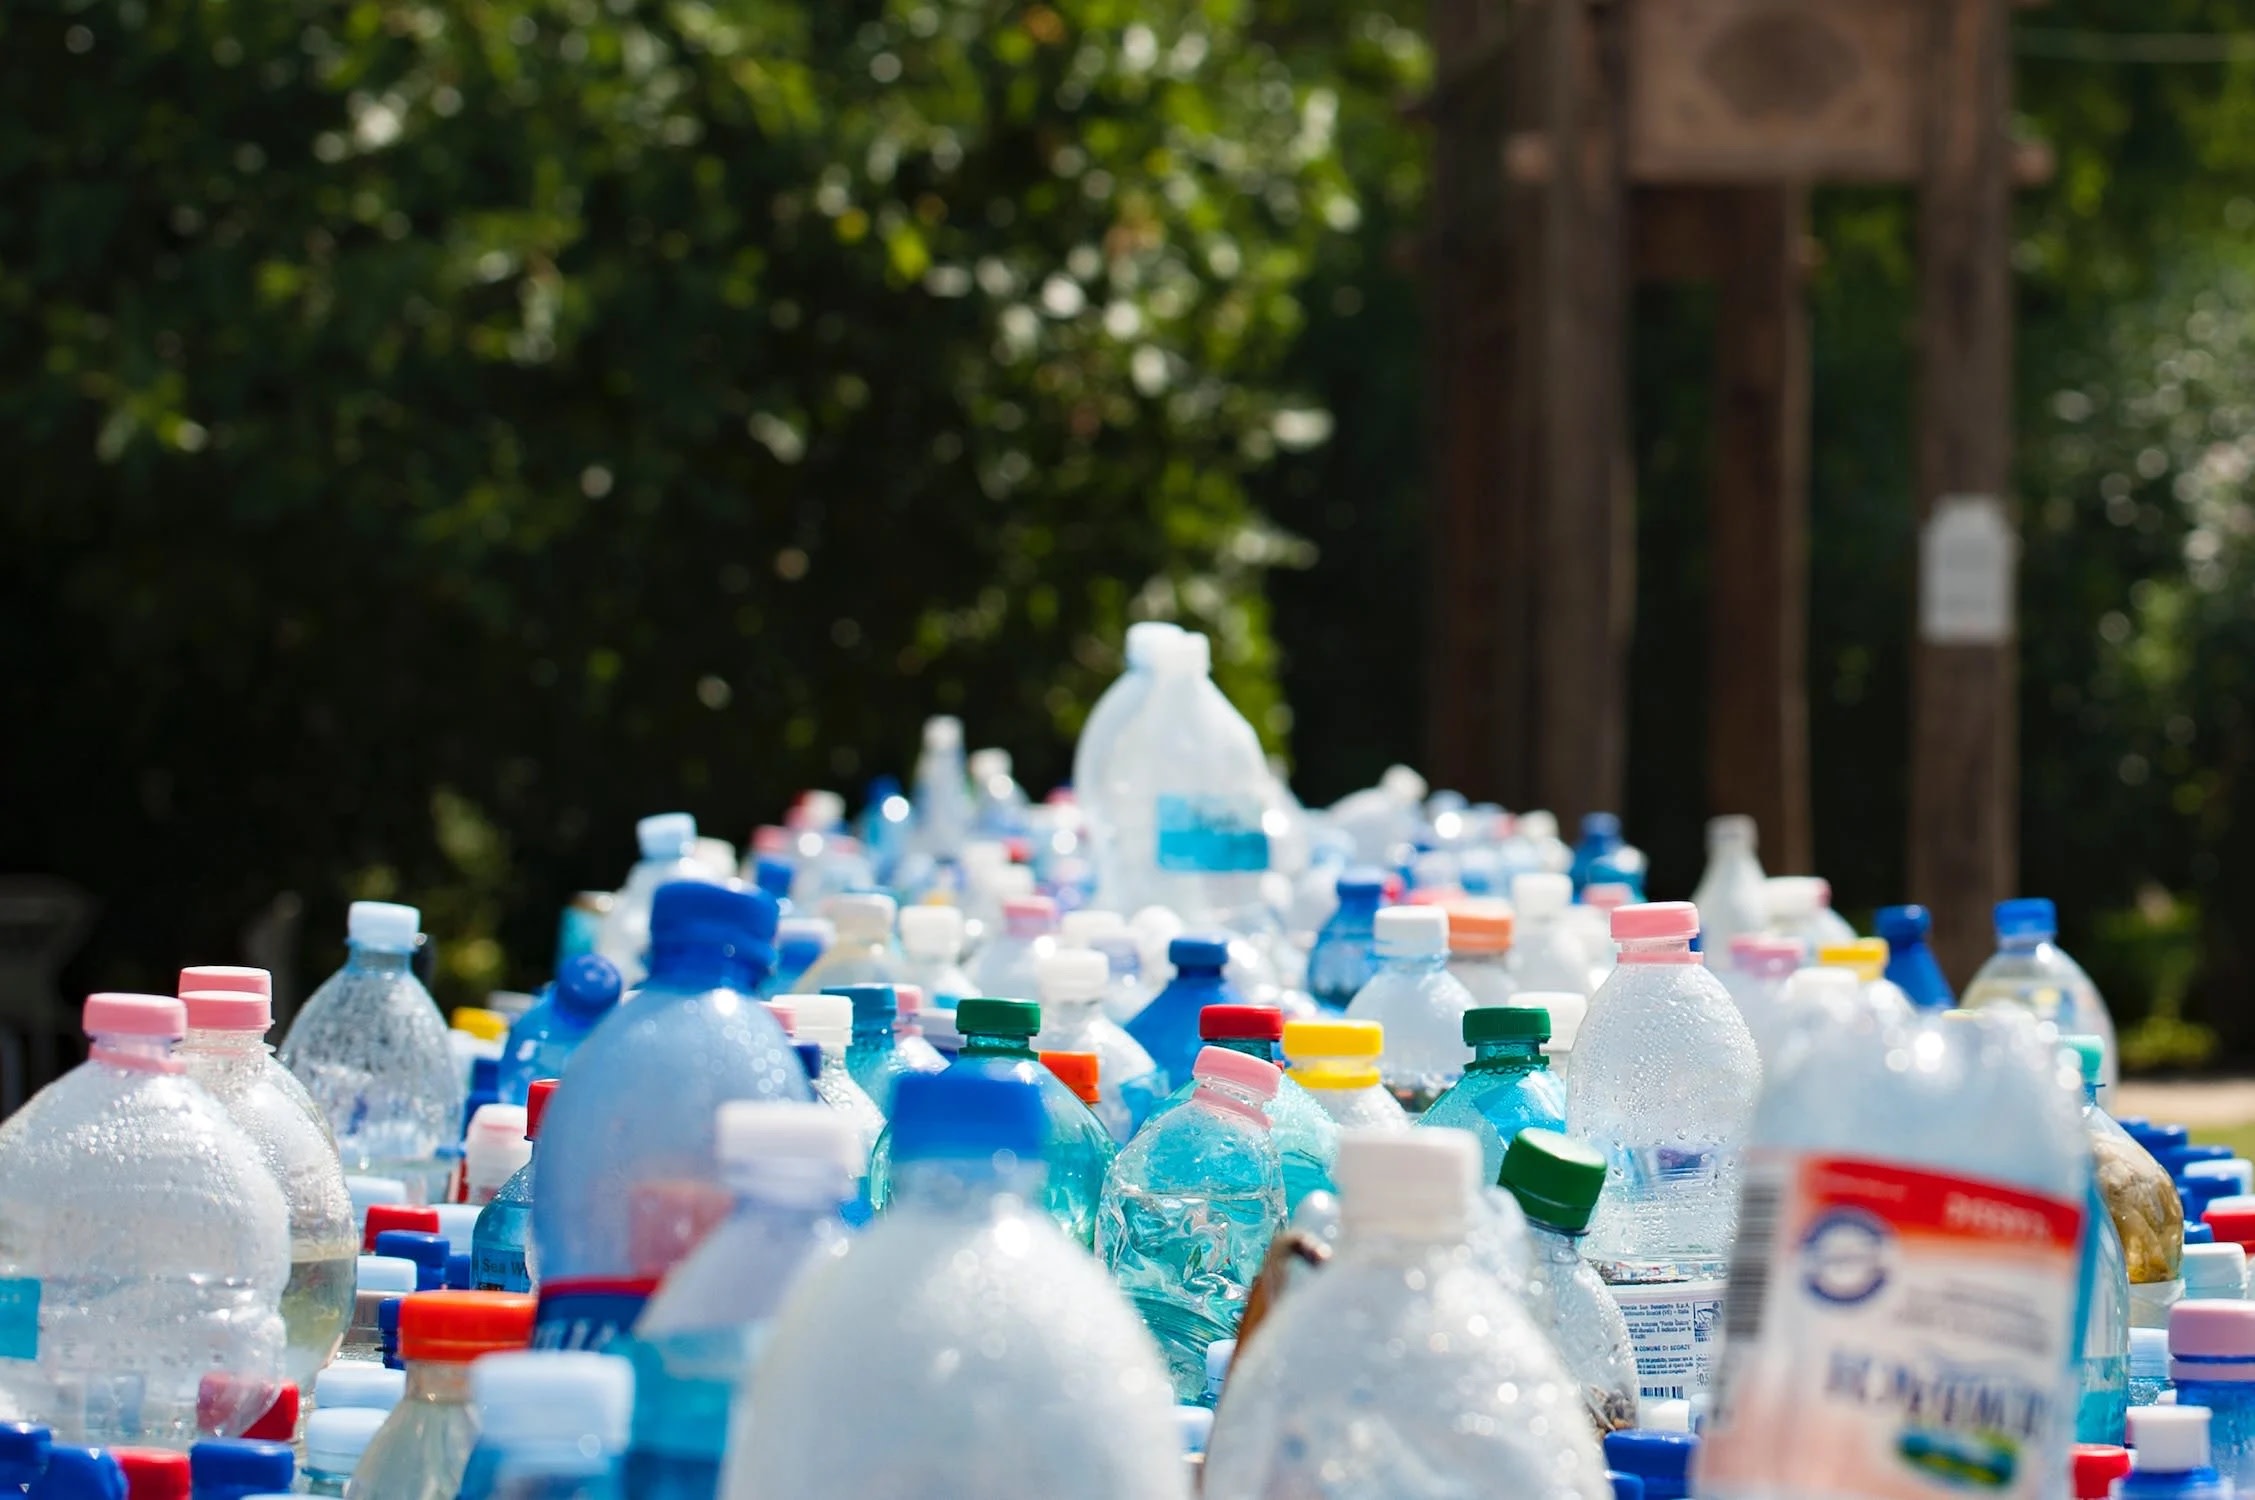 Image of multiple waste plastic bottles